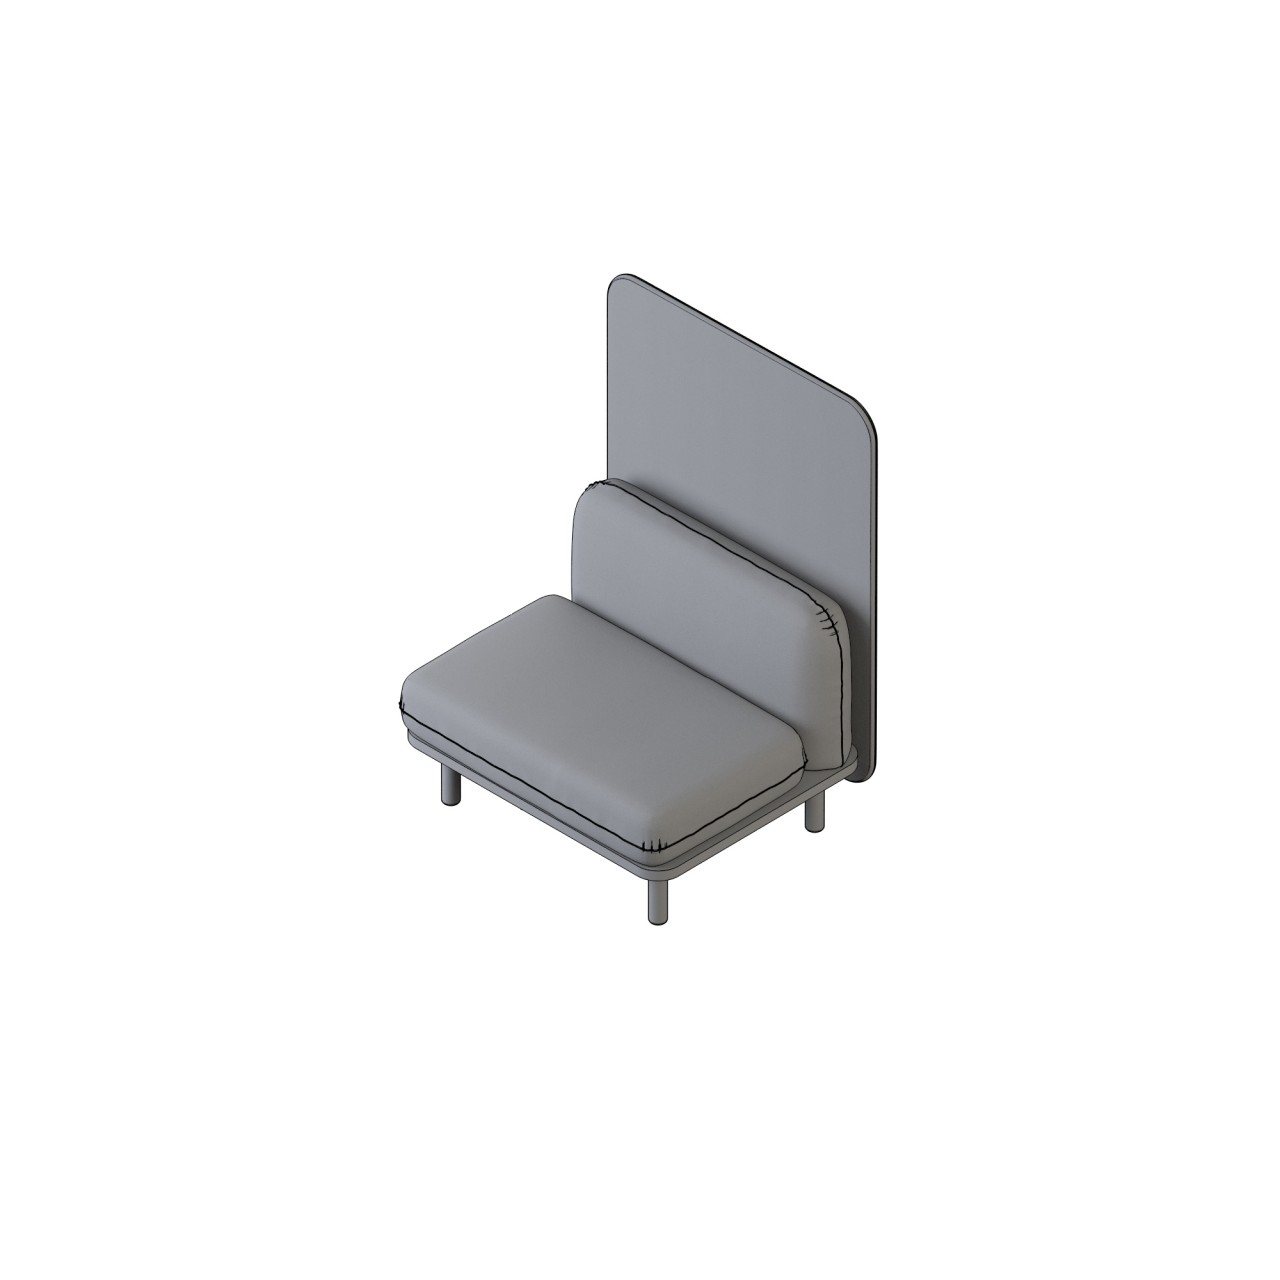 Soft - 24003-B
one seat privacy
COM 7.75
back 1.75,
base 1, seat 2.75,
panel 2.75
 